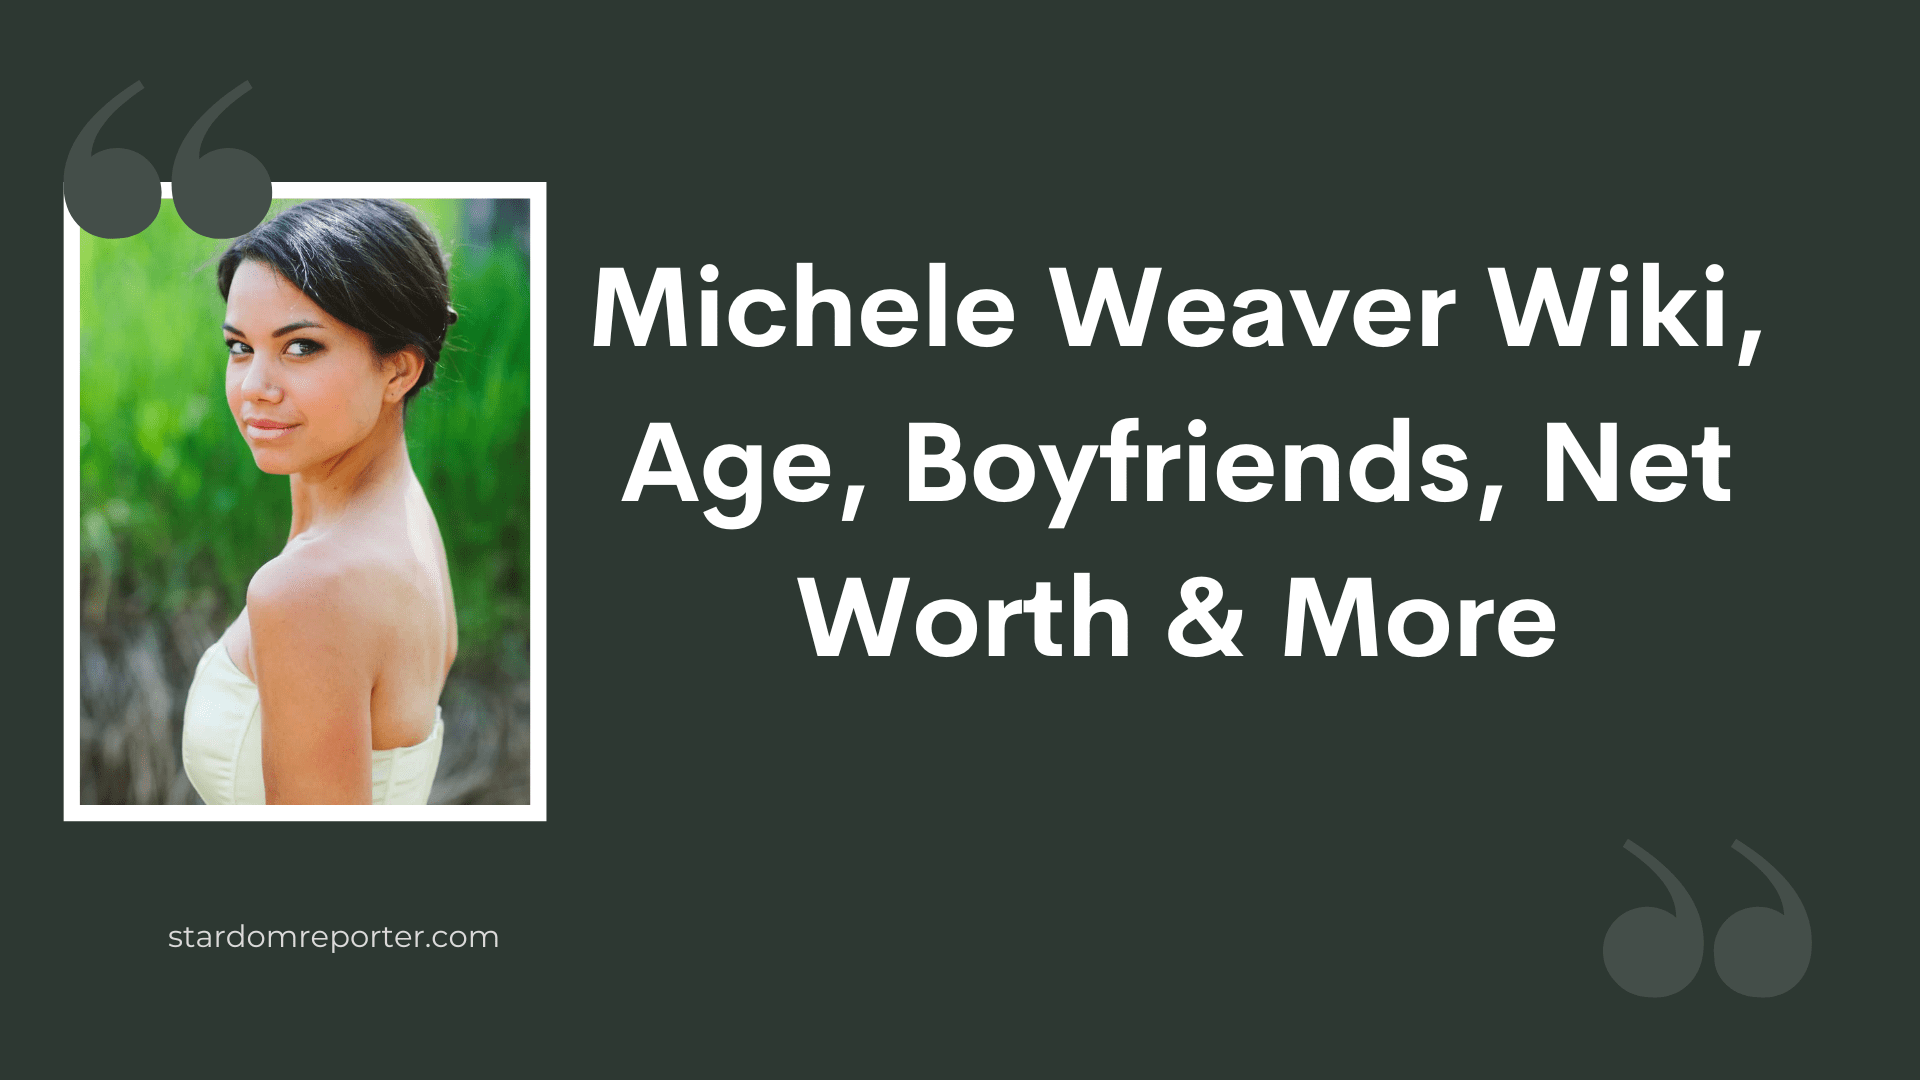 Michele Weaver Wiki, Age, Bio, Boyfriends, Net Worth & More - 25